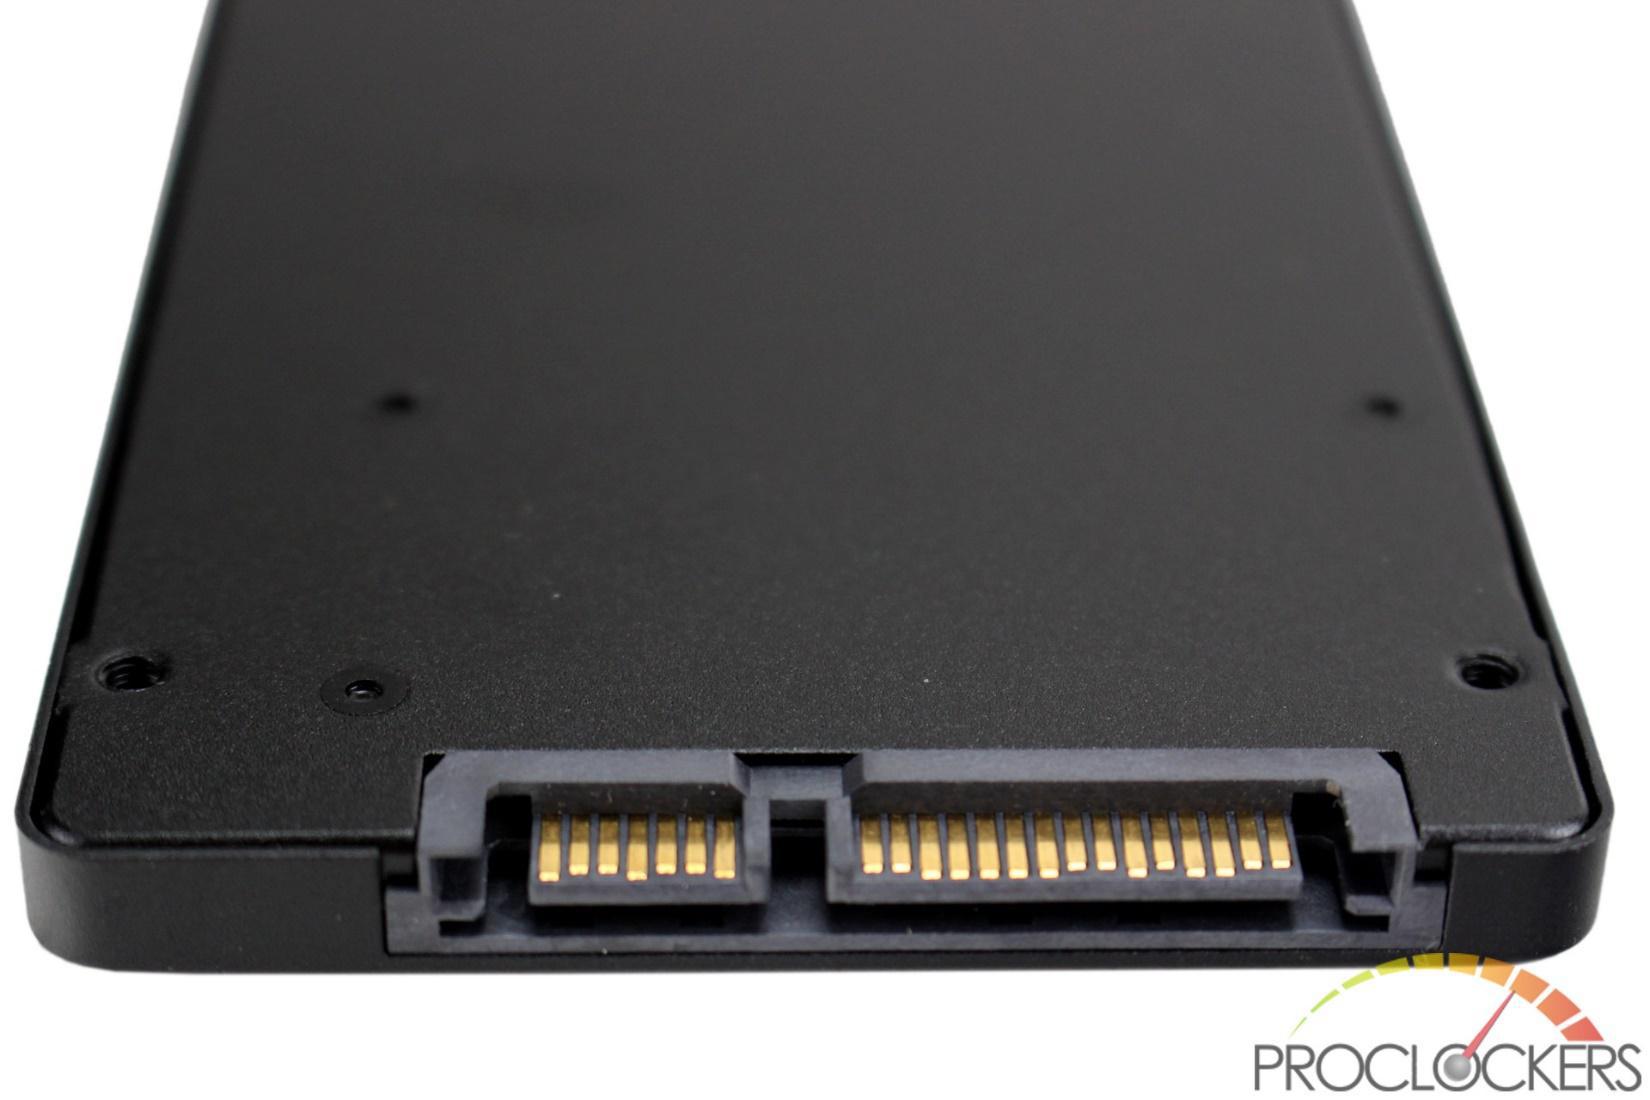 Silicon Power 128GB A55 M.2 SATA SSD Review - ServeTheHome